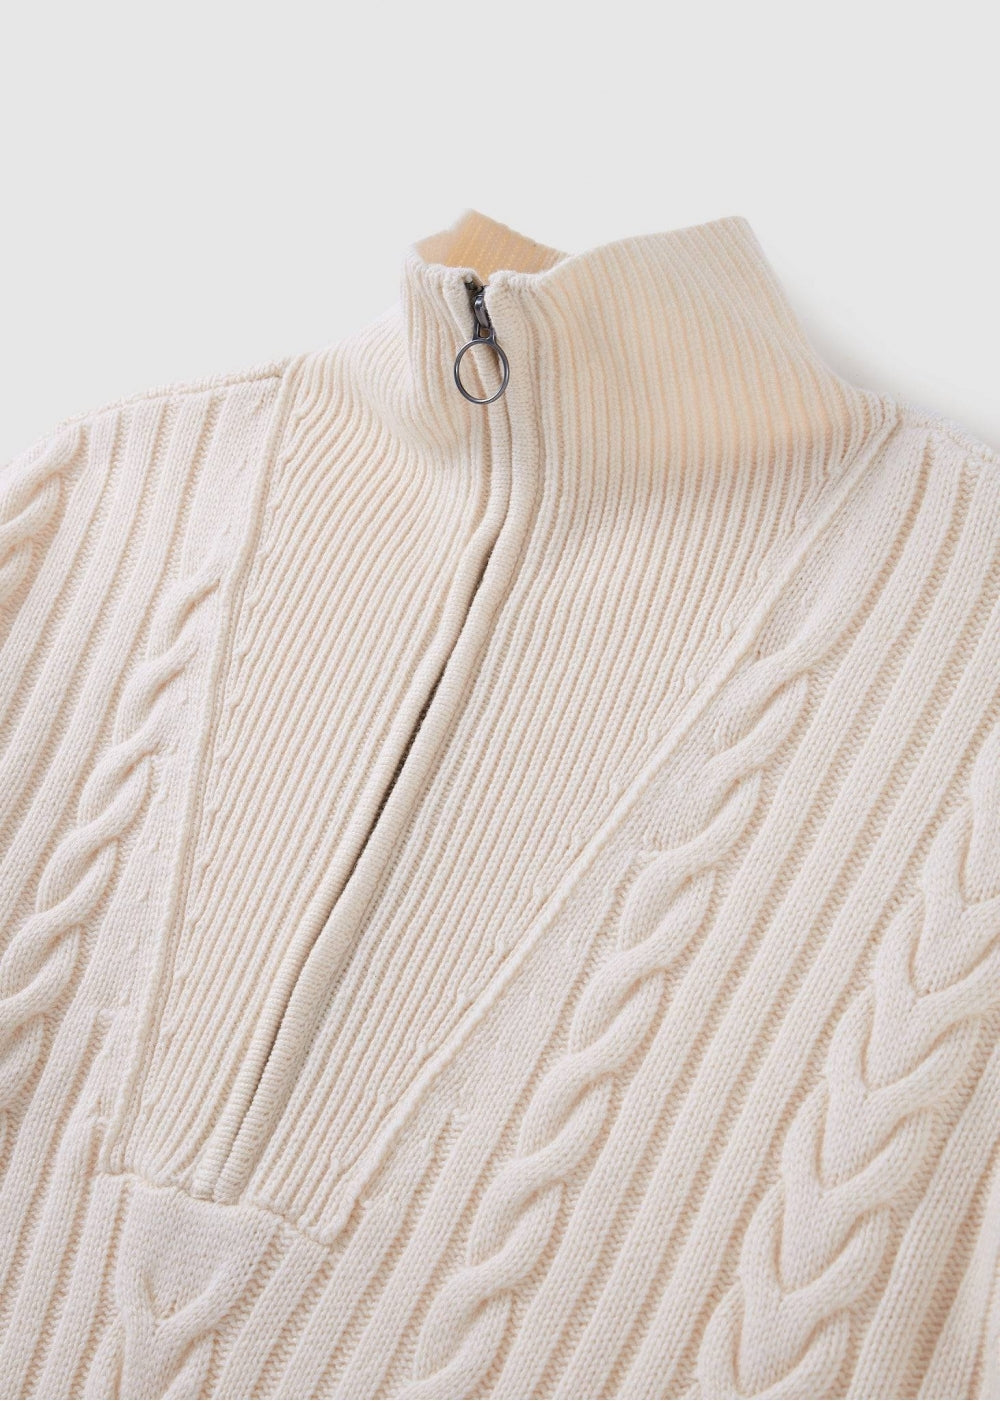 Maylene recycled cashmere sweater - ivory PAIGE